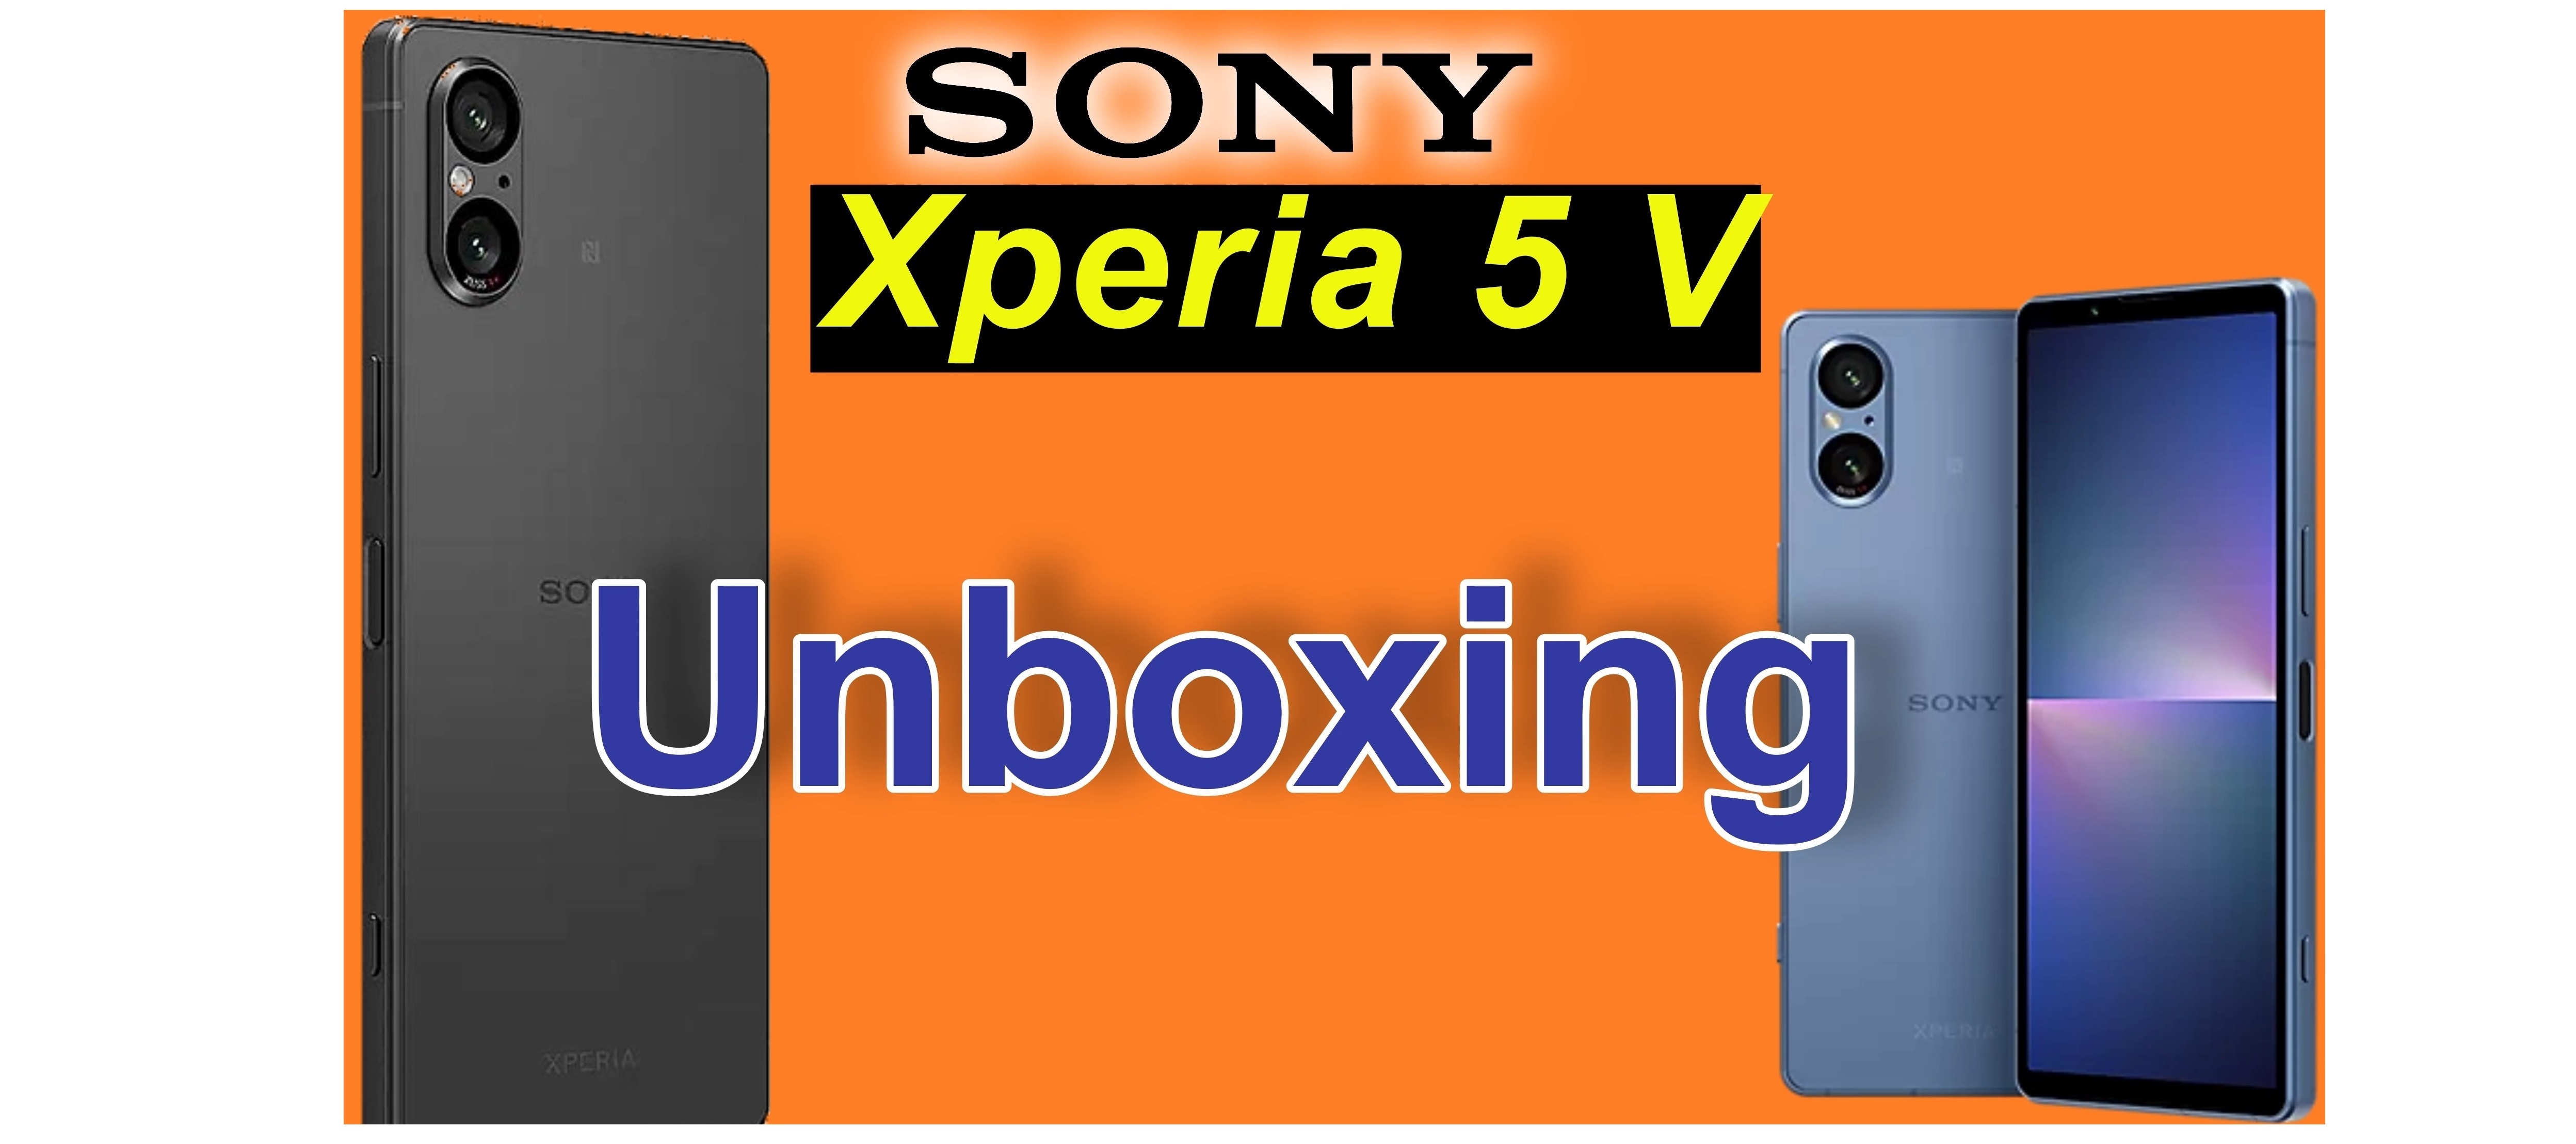 Sony Xperia 5 V - Unboxing und Ersteindruck